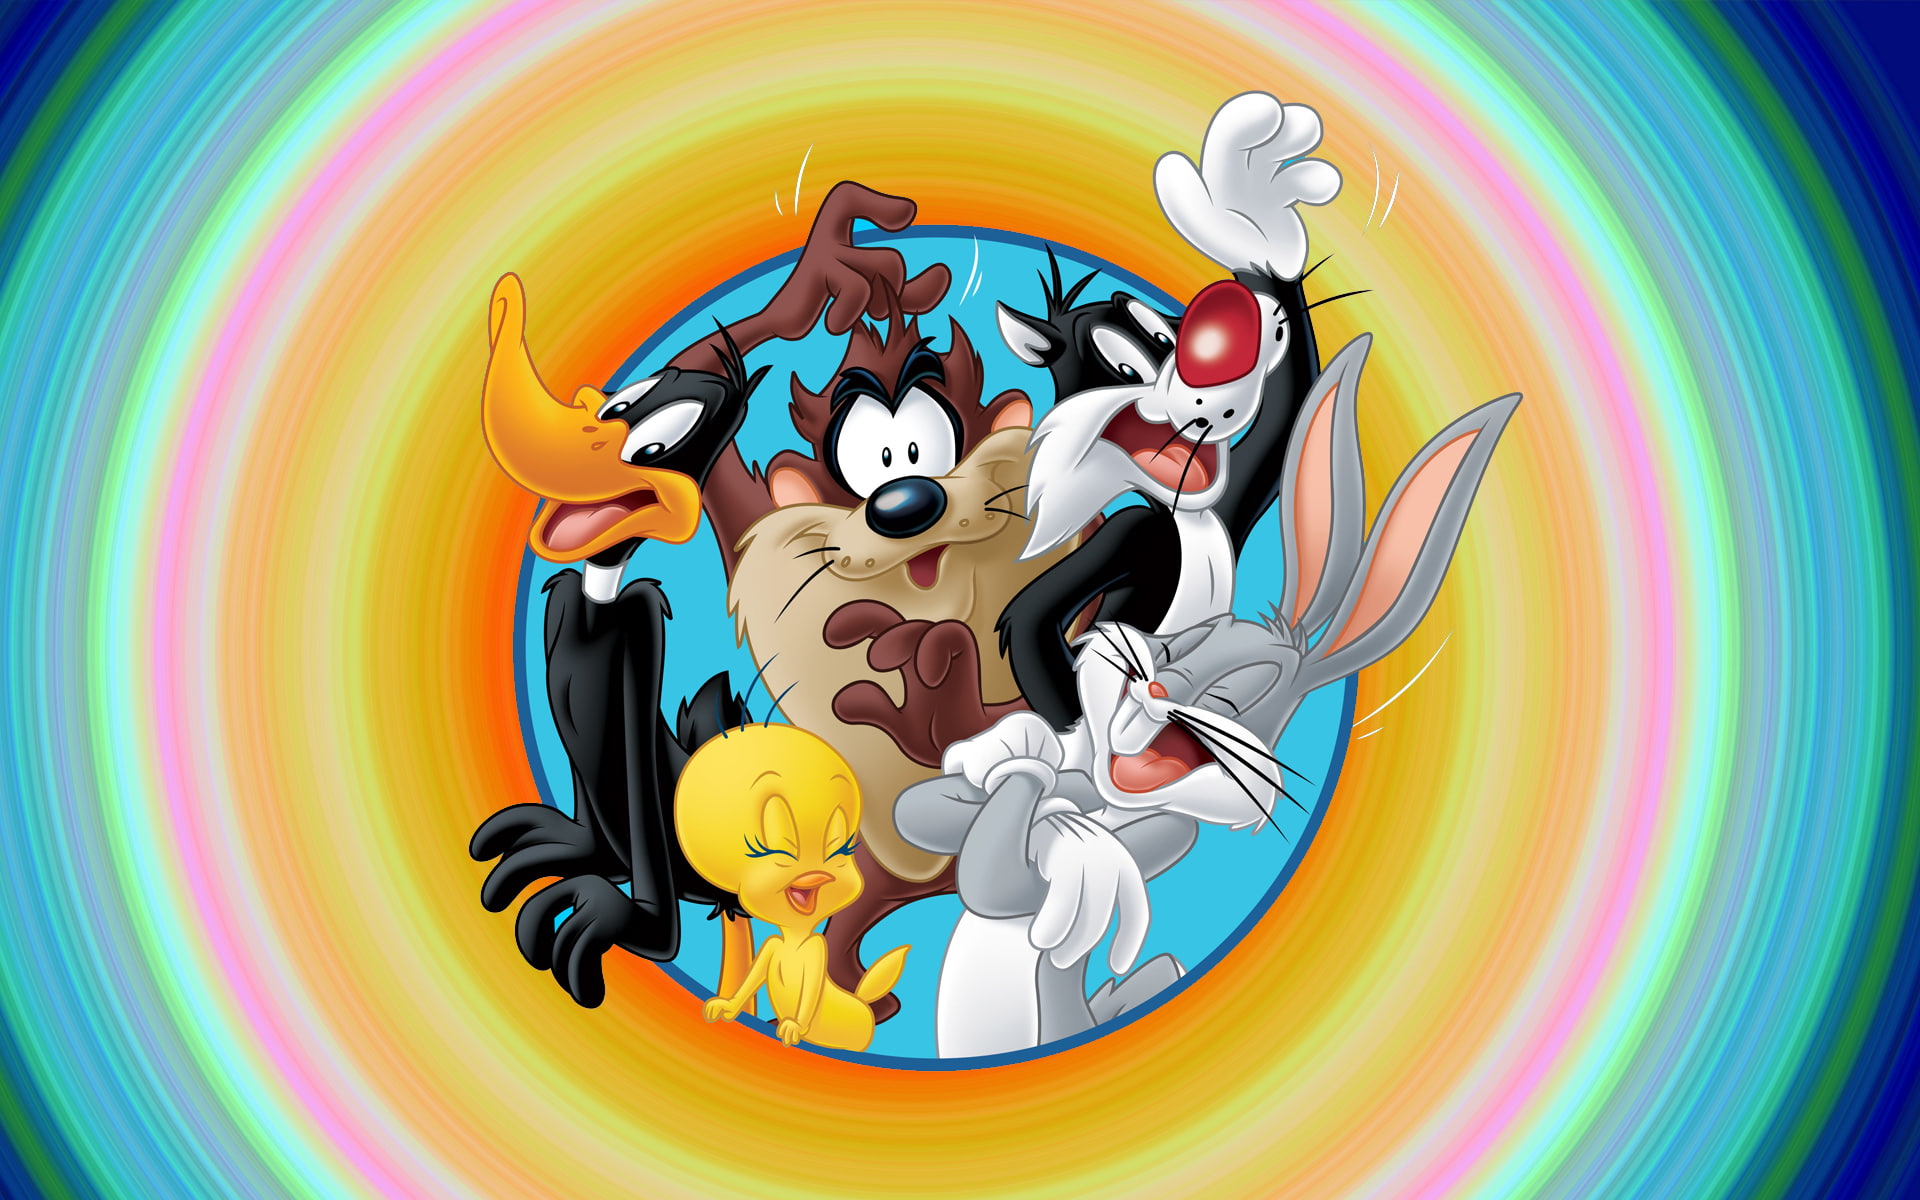 Cartoons Bugs Bunny Daffy Duck Tweety Bird Sylvester The Cat Tasmanian Devil Desktop Wallpaper Hd For Mobile Phones And Laptops 1920×1200